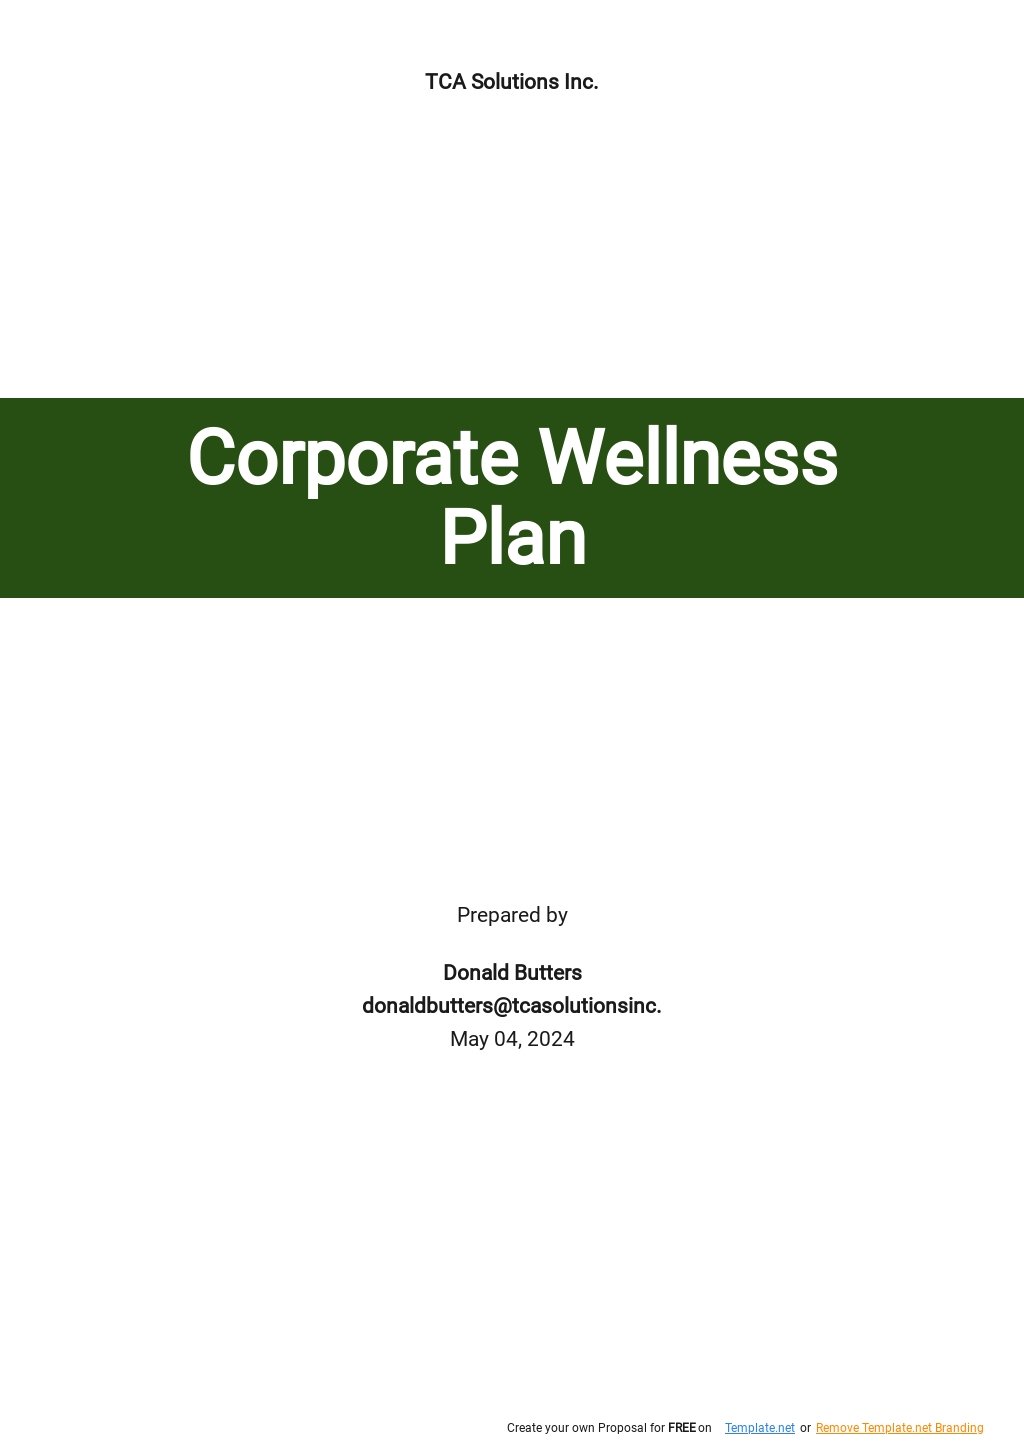 Corporate Wellness Plan Template